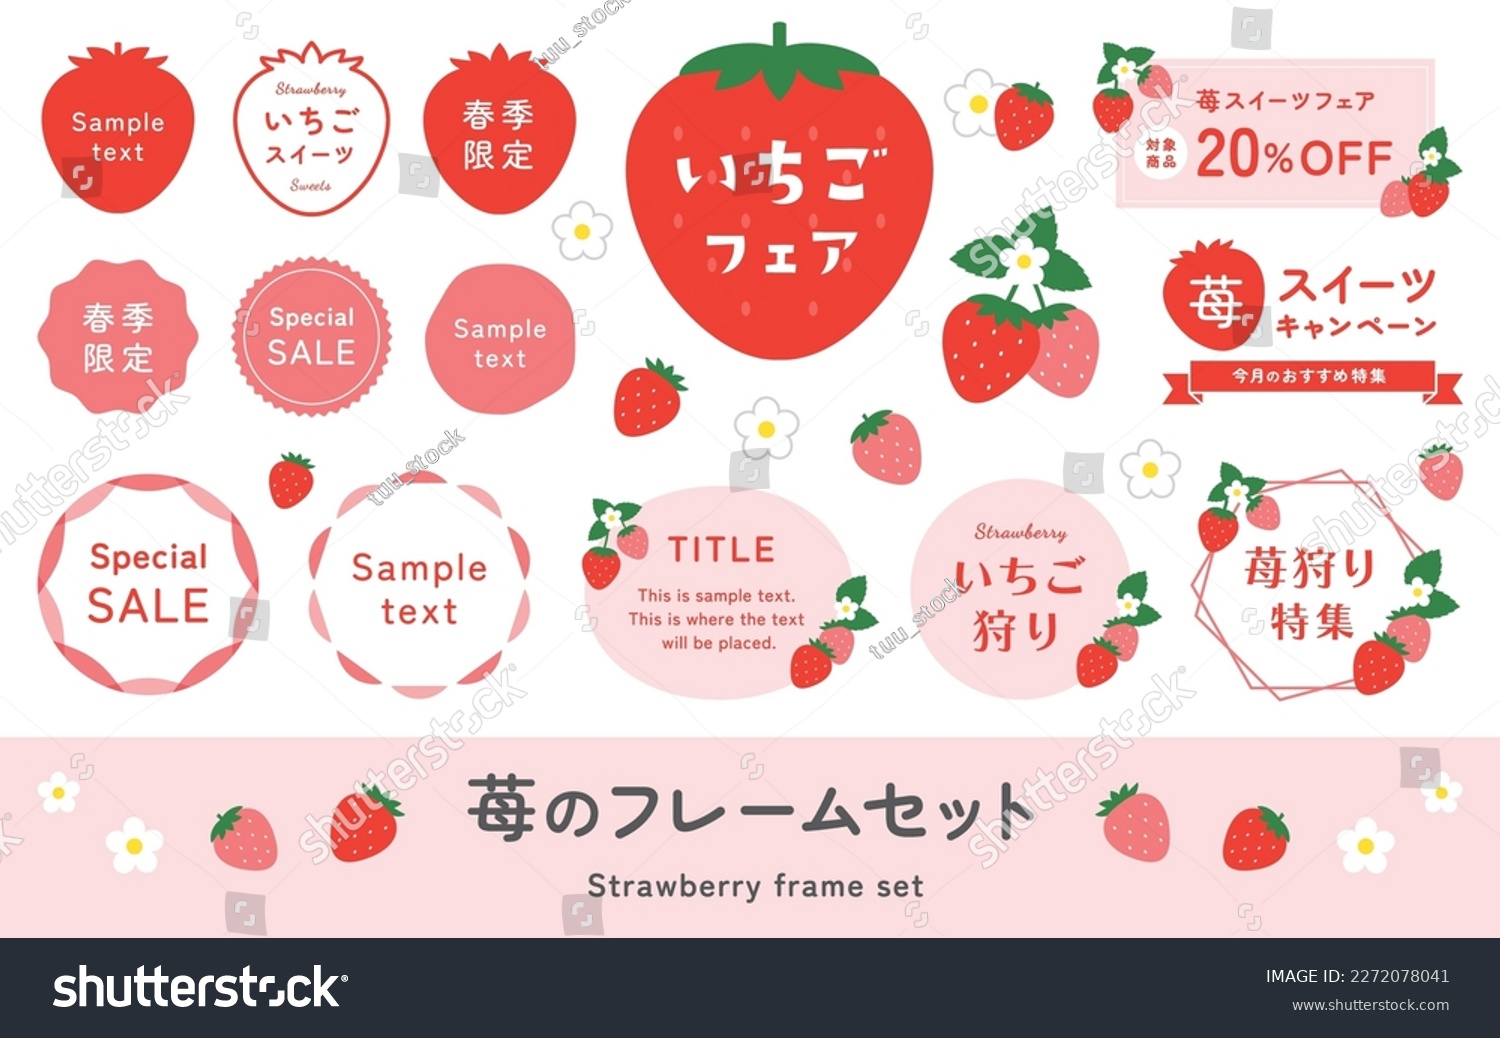 Cute strawberry frame illustration set. Seasonal fruits. Spring vector material.  (Translation of Japanese text: "Strawberry fair, sweets", "strawberry frame set", "strawberry picking".) #2272078041